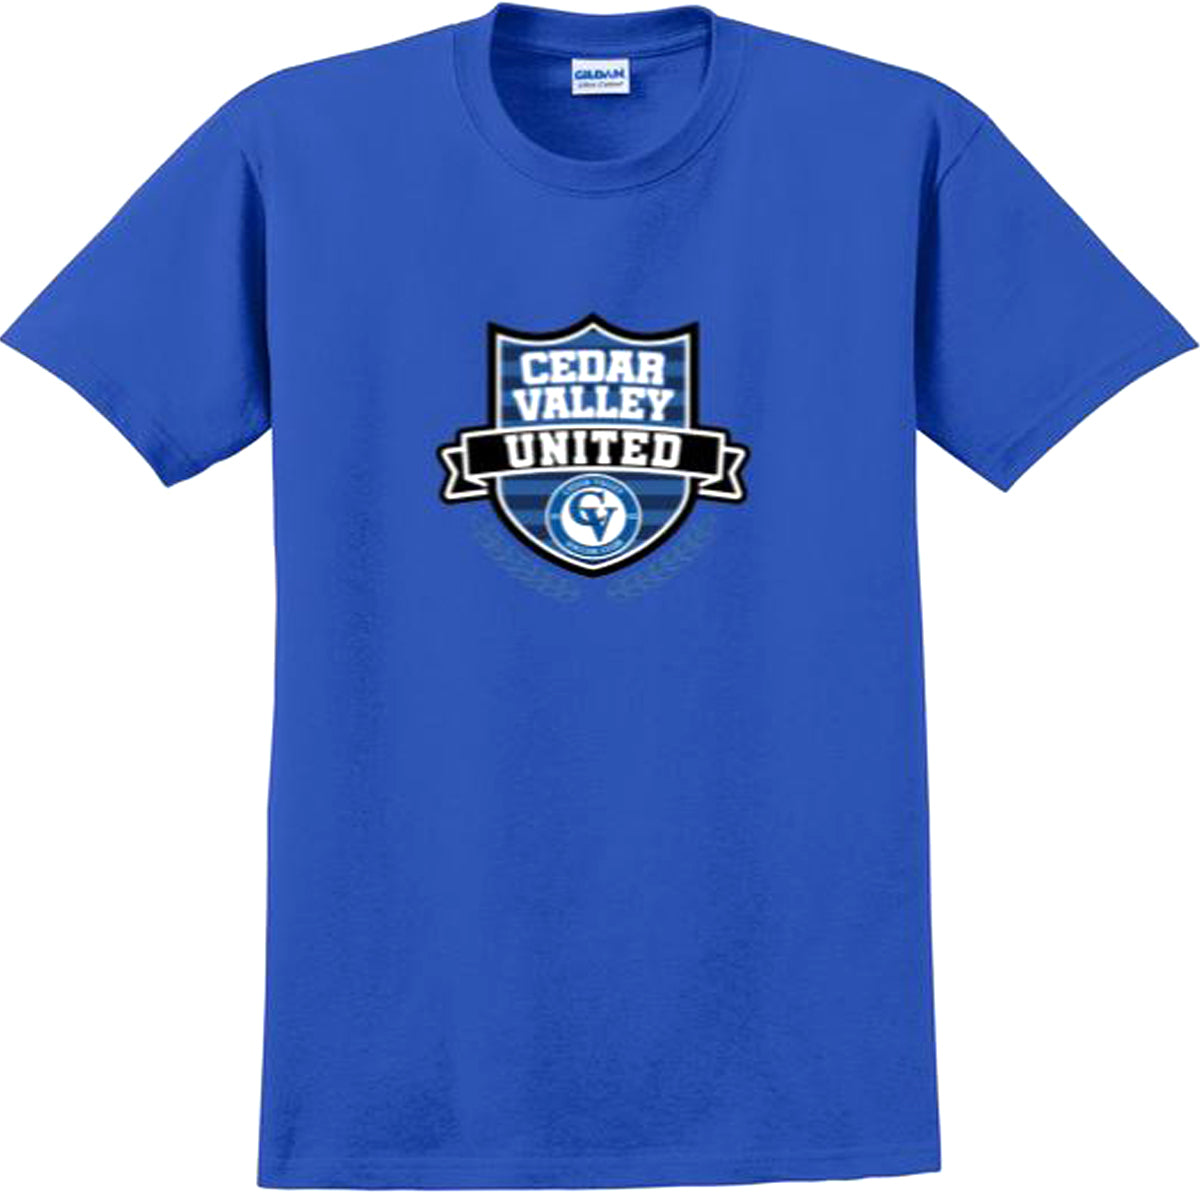 Cedar Valley Soccer Club Ultra Cotton 100% Cotton T-Shirt Sweatshirt Gildan Men's Small Royal 